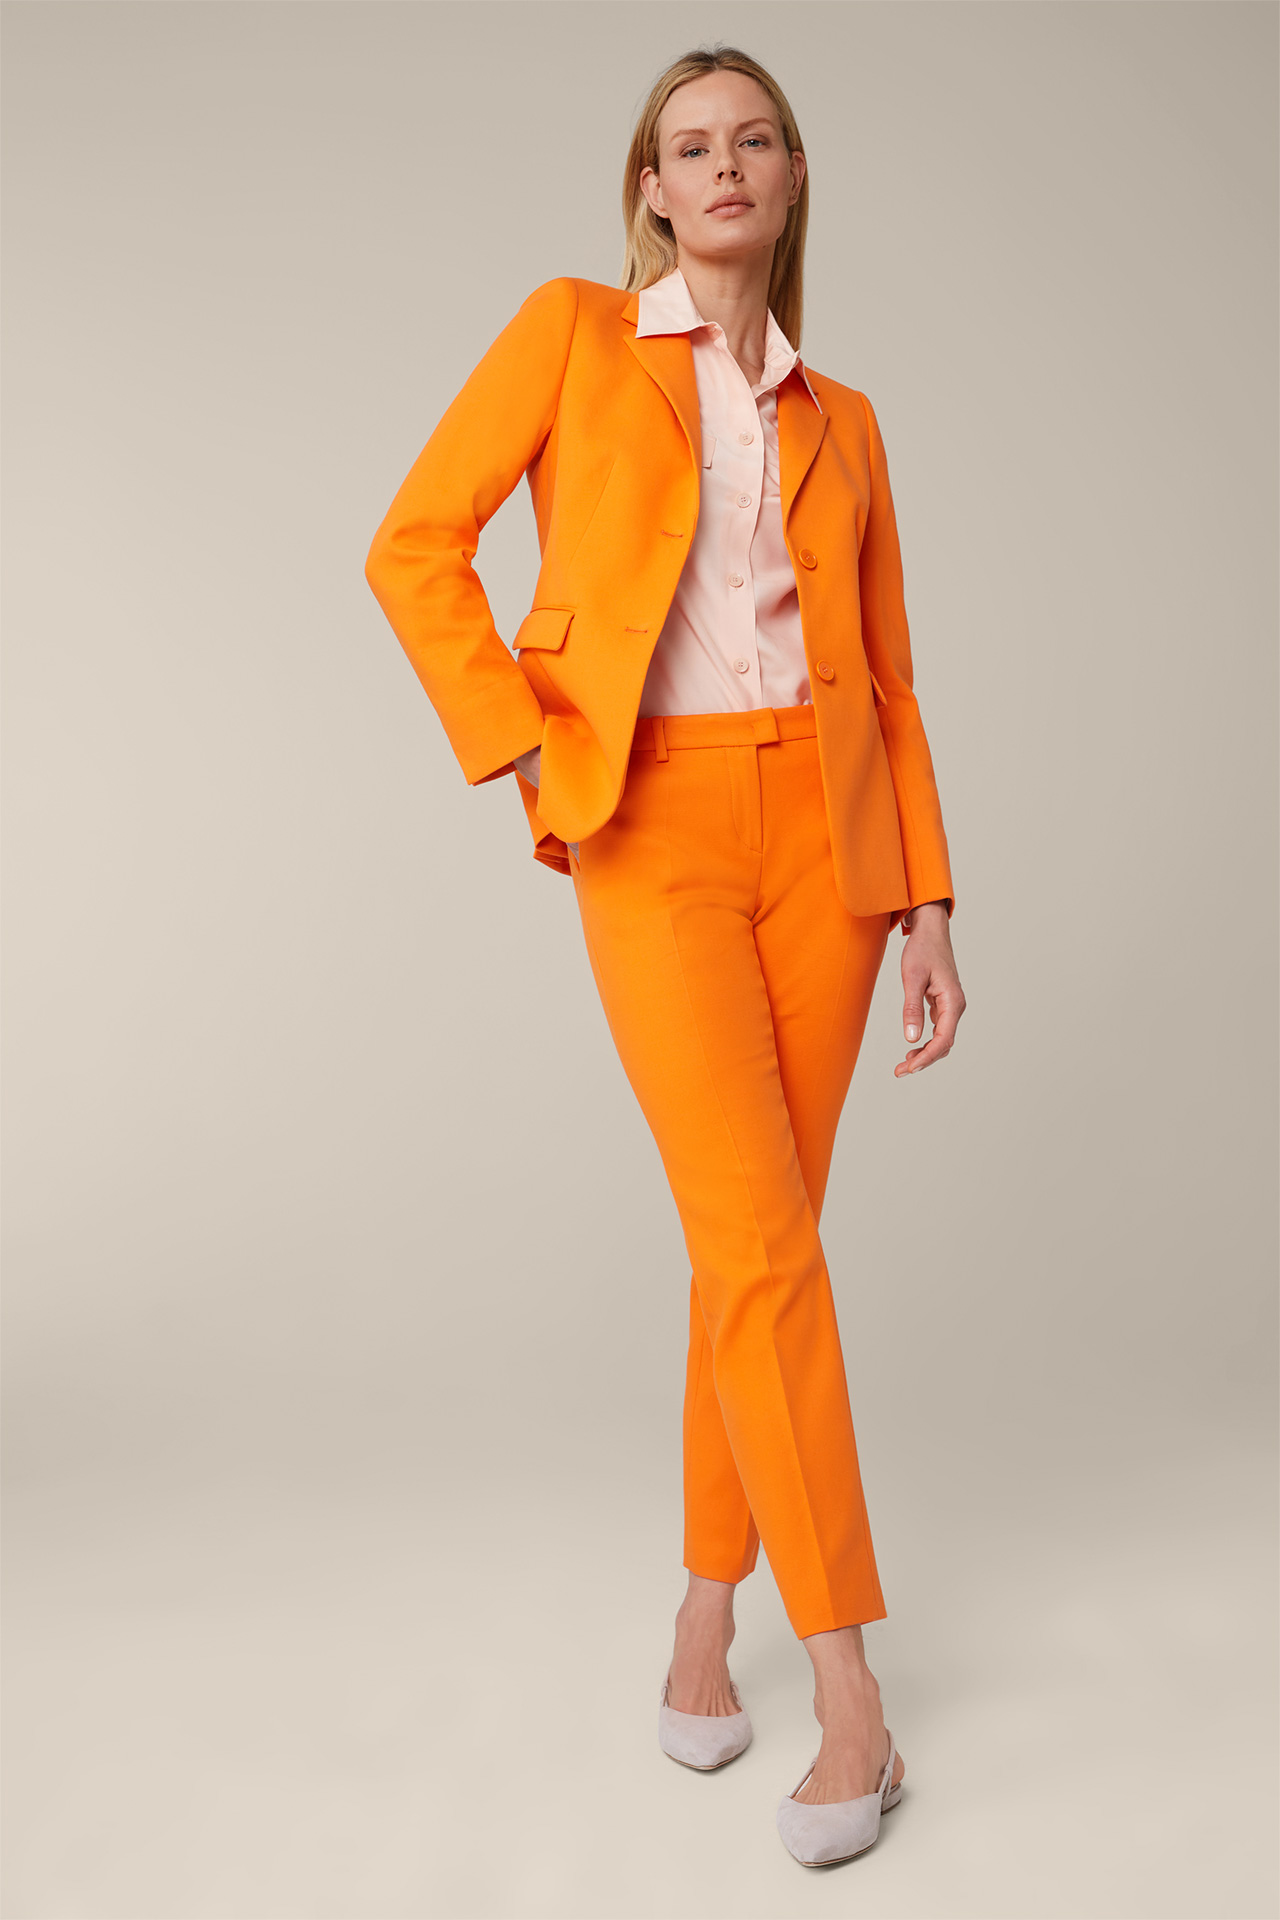 Baumwollstretch-Anzug-Hose in Panamabindung in Orange